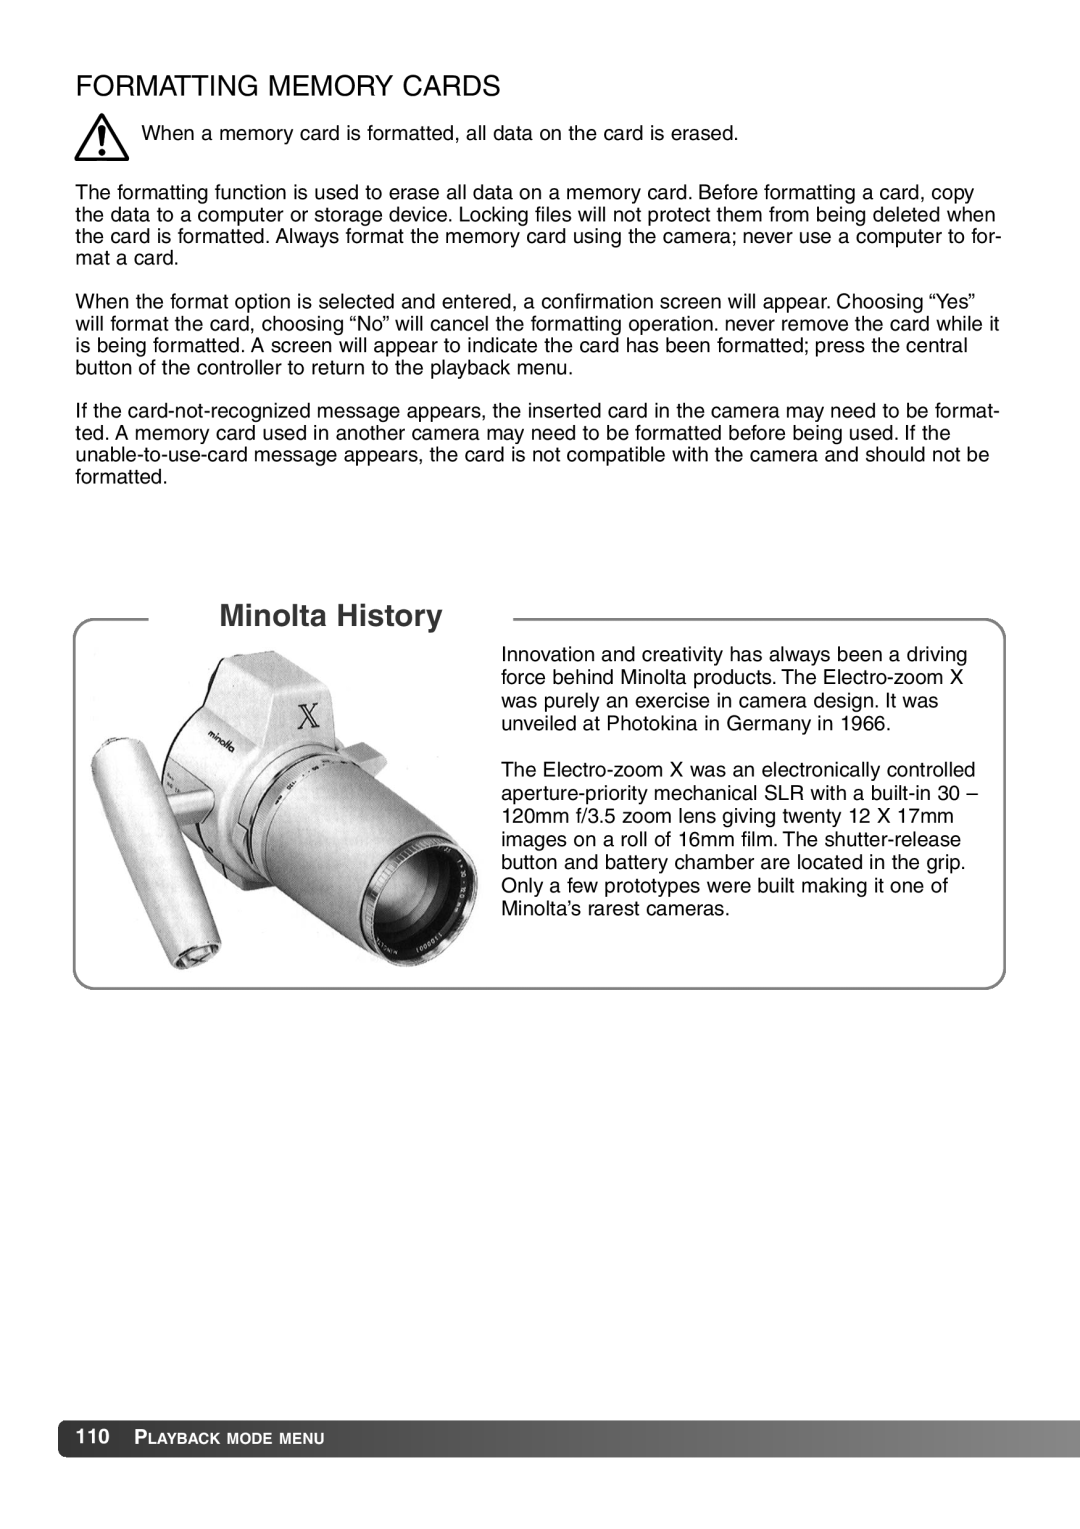 Konica Minolta 7Hi instruction manual Minolta History, Formatting Memory Cards 